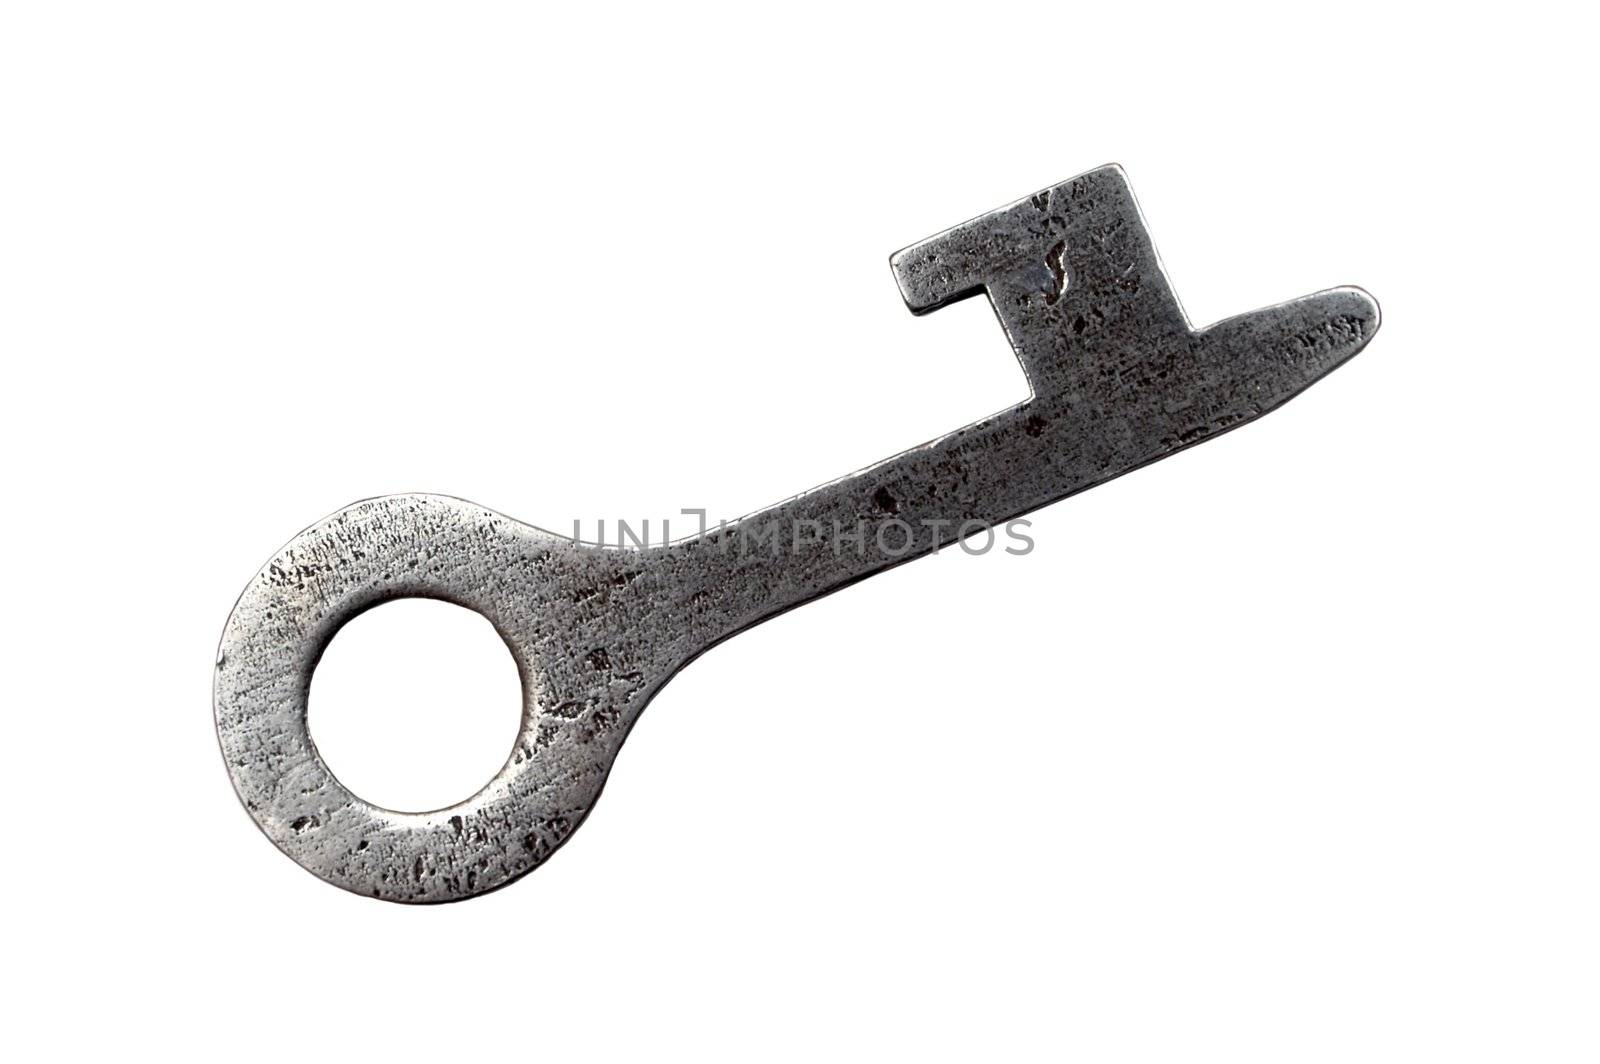 Old key by velkol